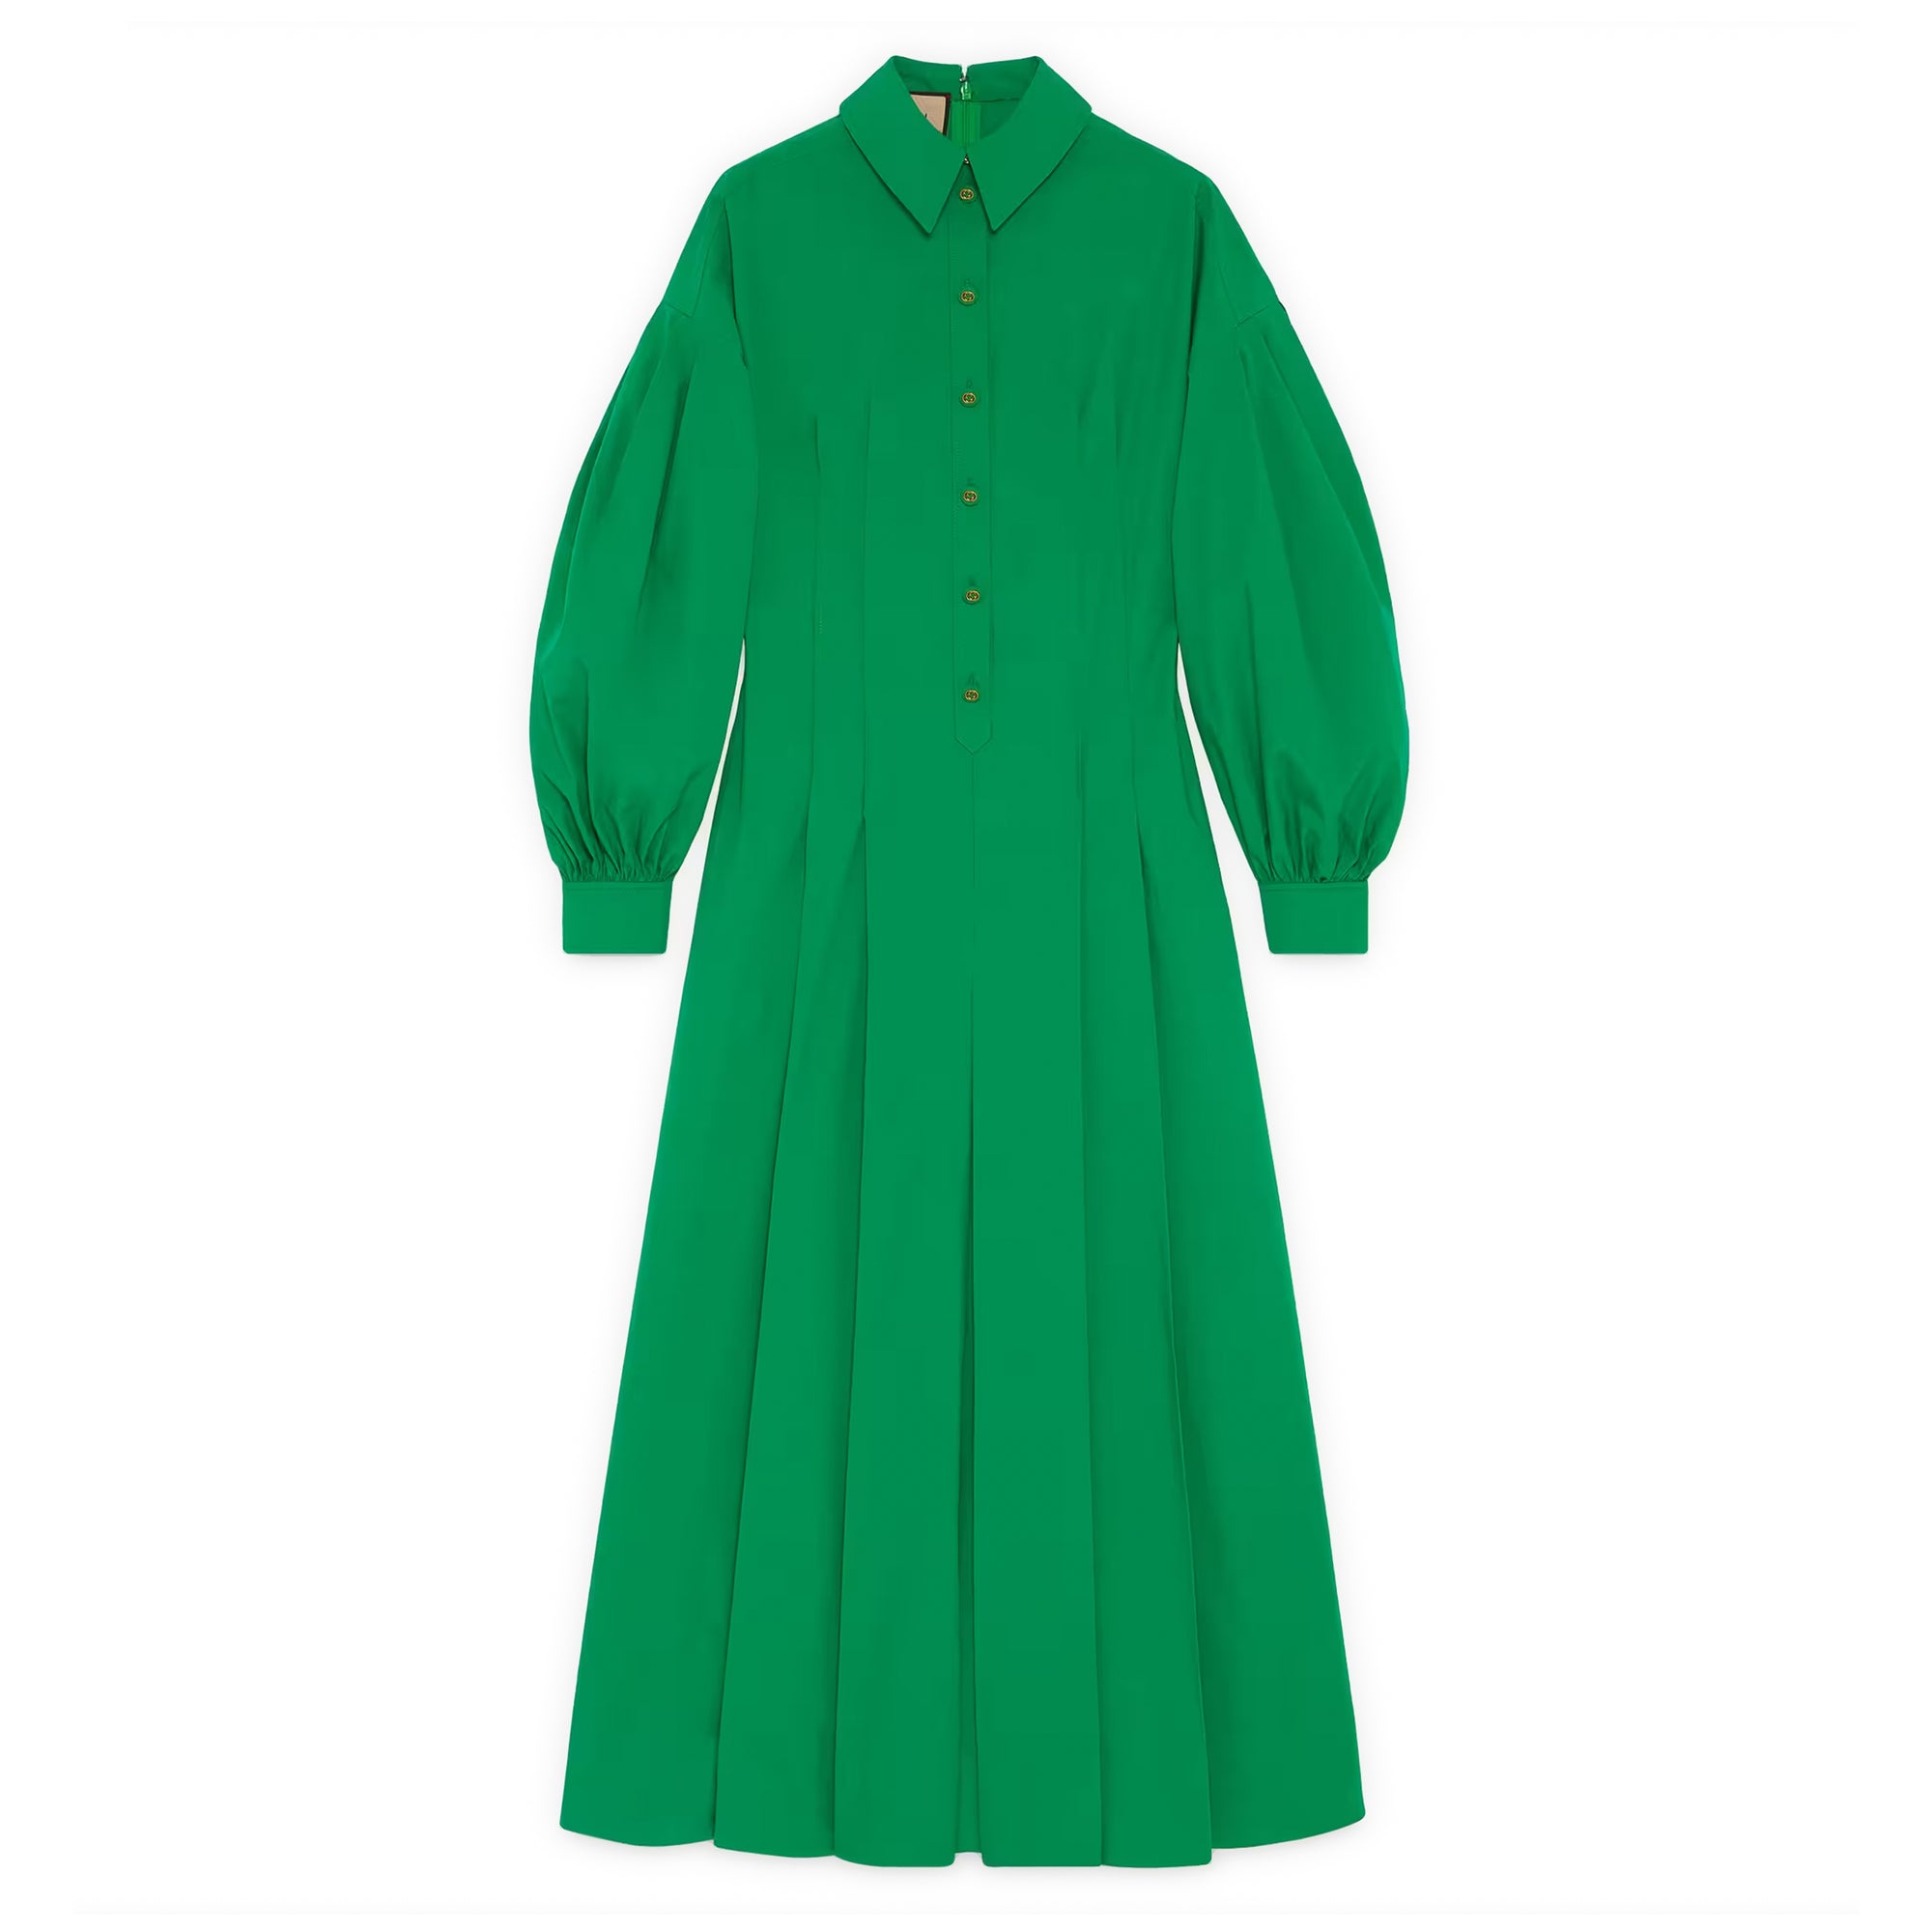 Gucci - Women’s Cotton Poplin Dress - (Green) view 1